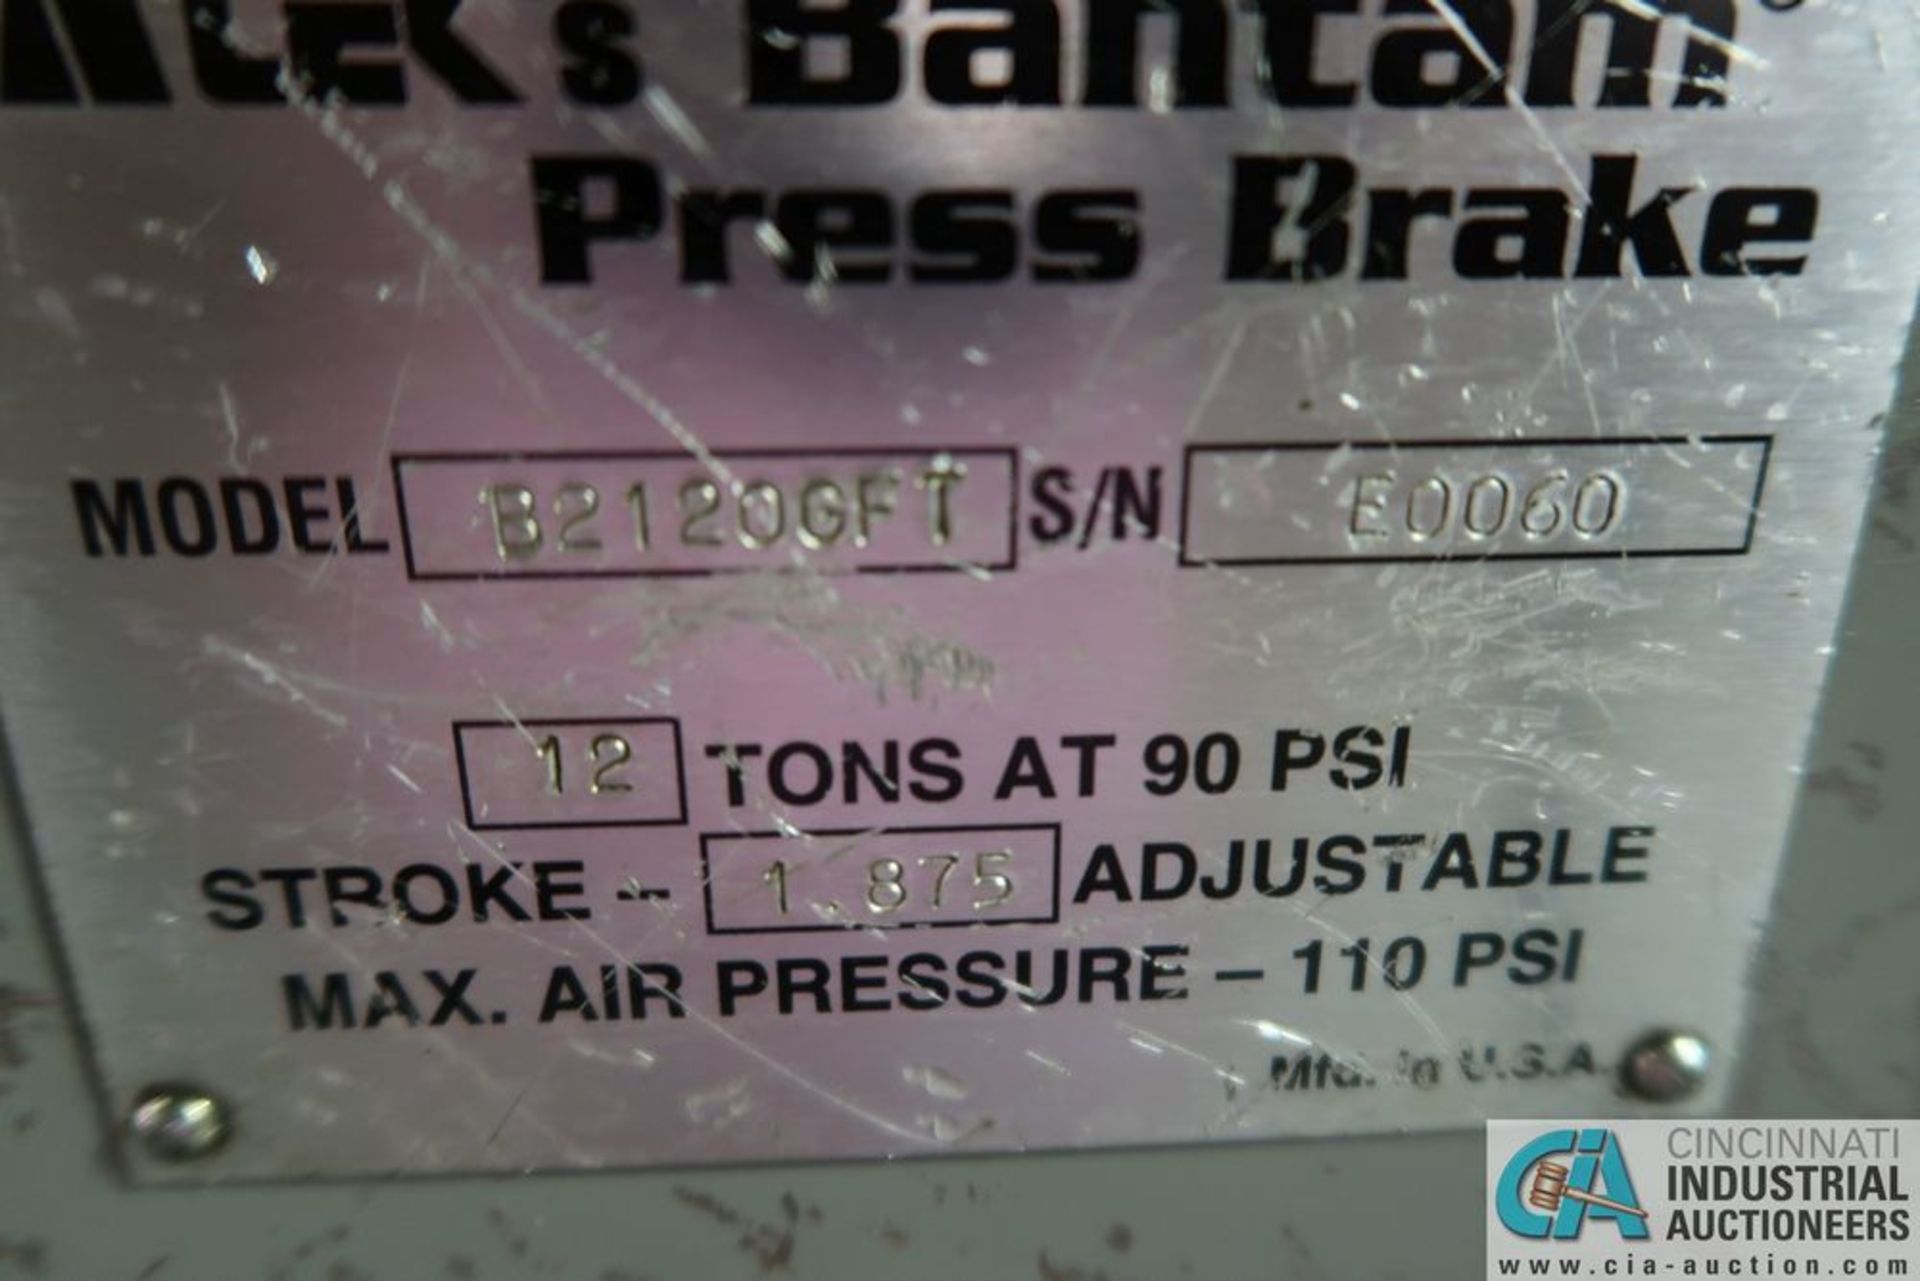 12 TON ATEK BANTAM MODEL B2120GFT PNEUMATIC PRESS BRAKE; S/N 0060, 24" BED, 1.875" RAM ADJUSTMENT, - Image 6 of 6